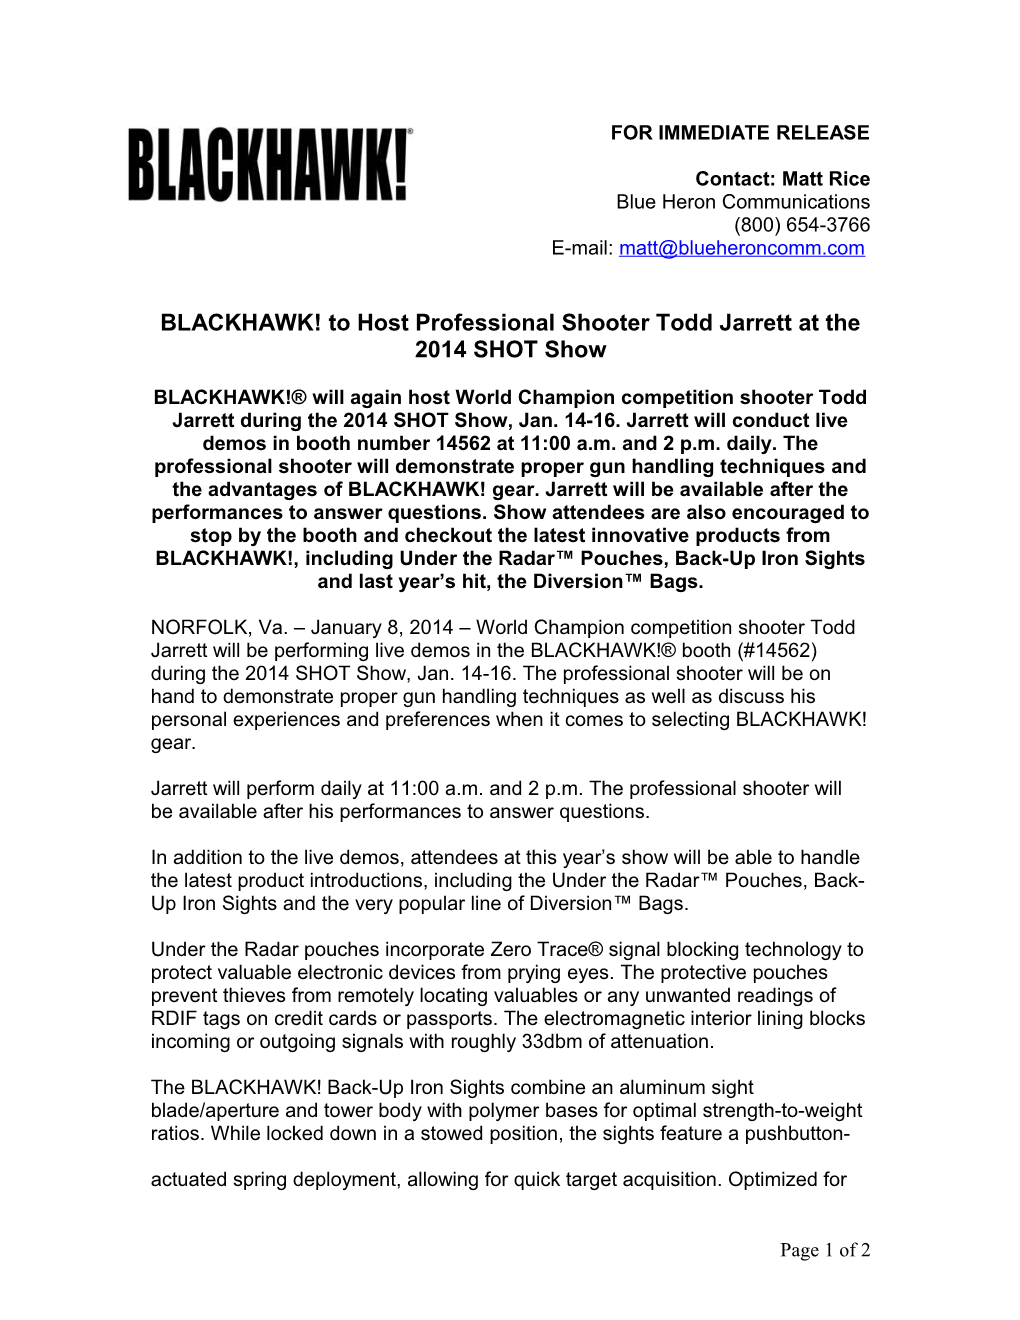 BLACKHAWK! to Host Professional Shootertodd Jarrettat the 2014SHOT Show